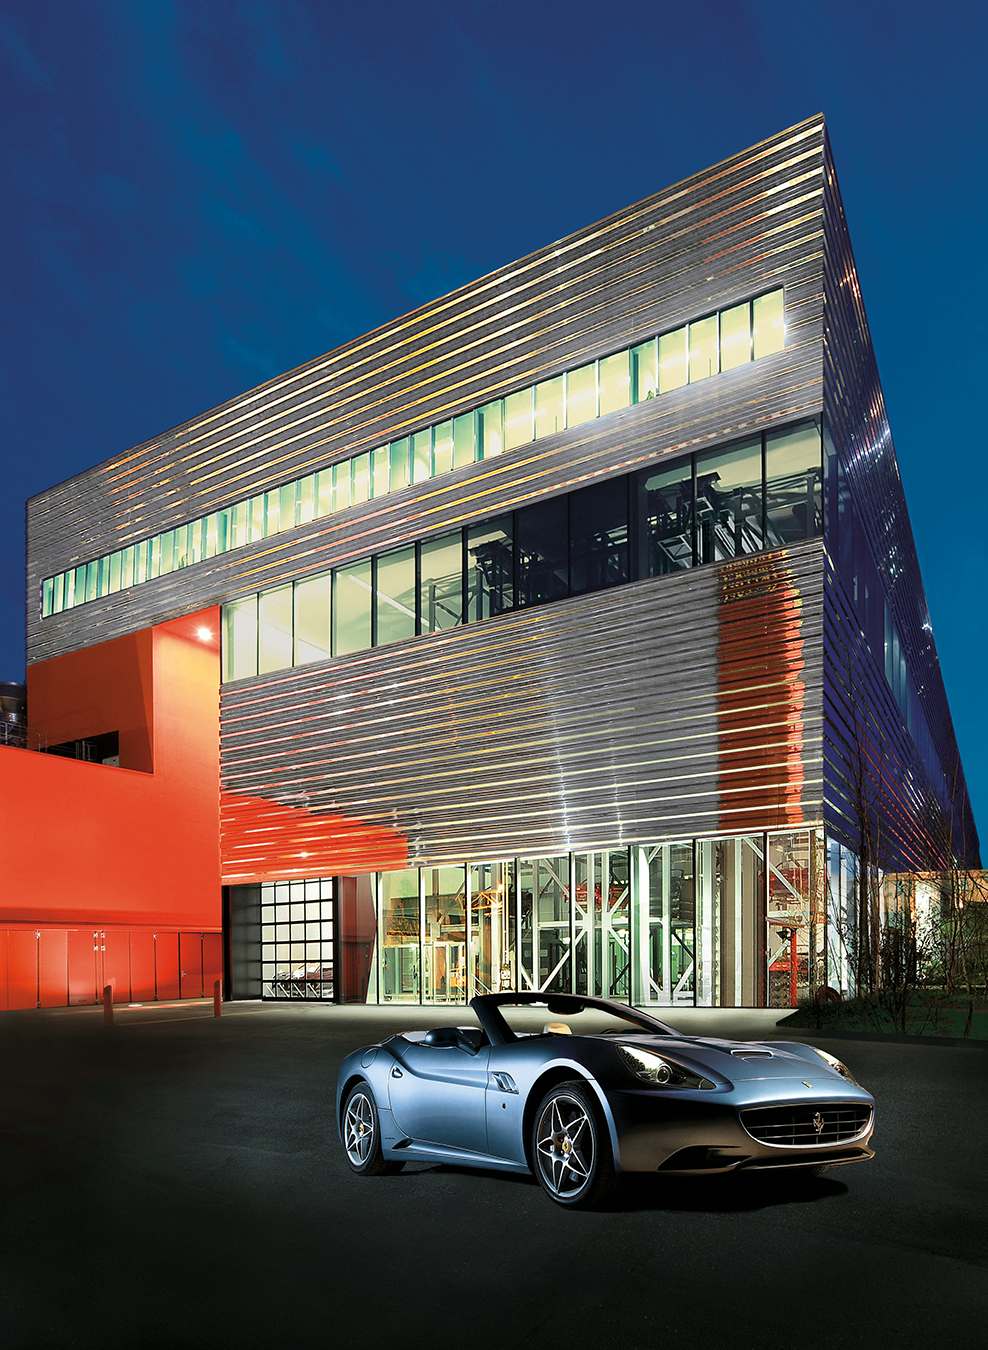 Nuvo Magazine: The Ferrari California